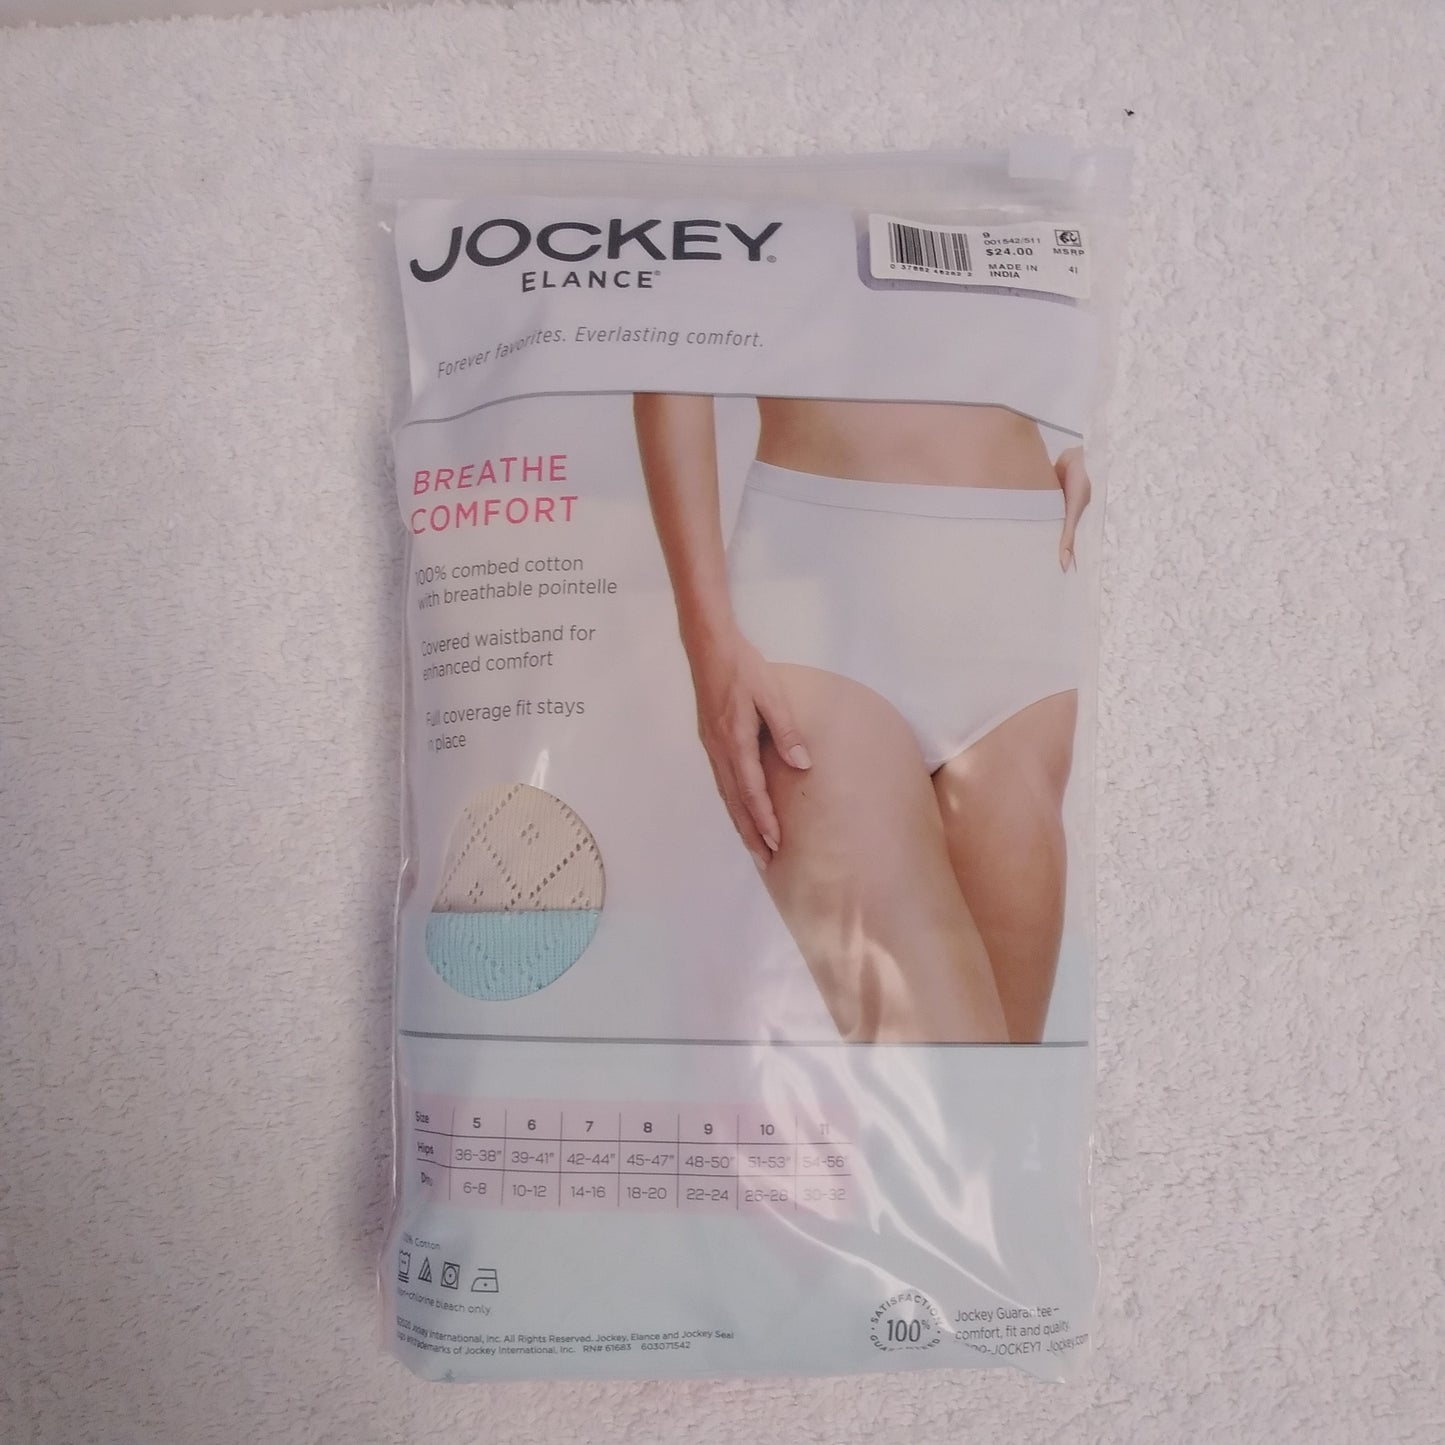 NWT - Jockey Elance Breathe Comfort 100% Cotton Brief Panties 3